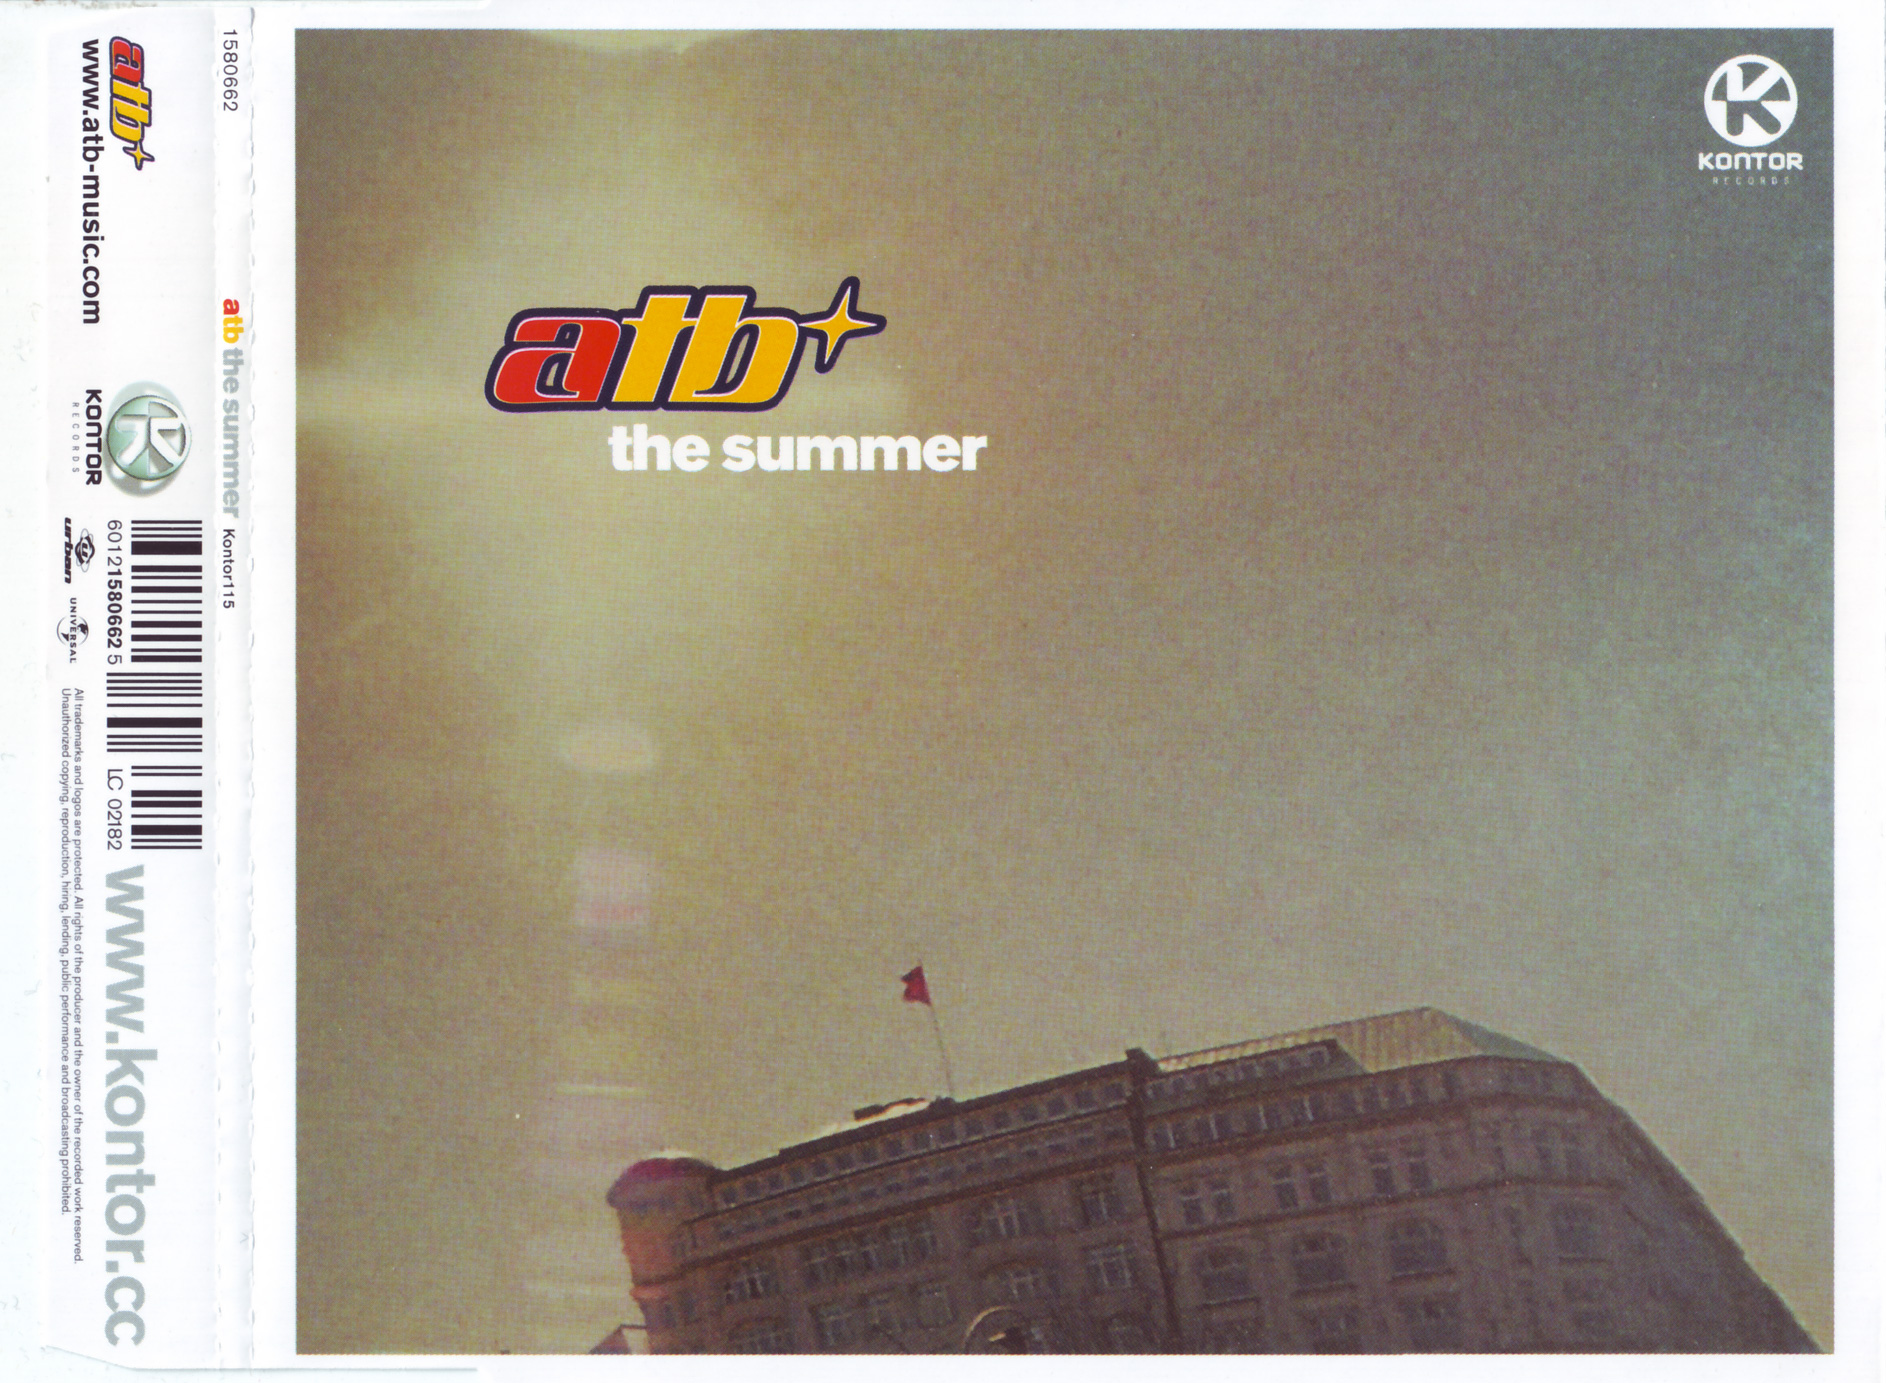 ATB — The summer